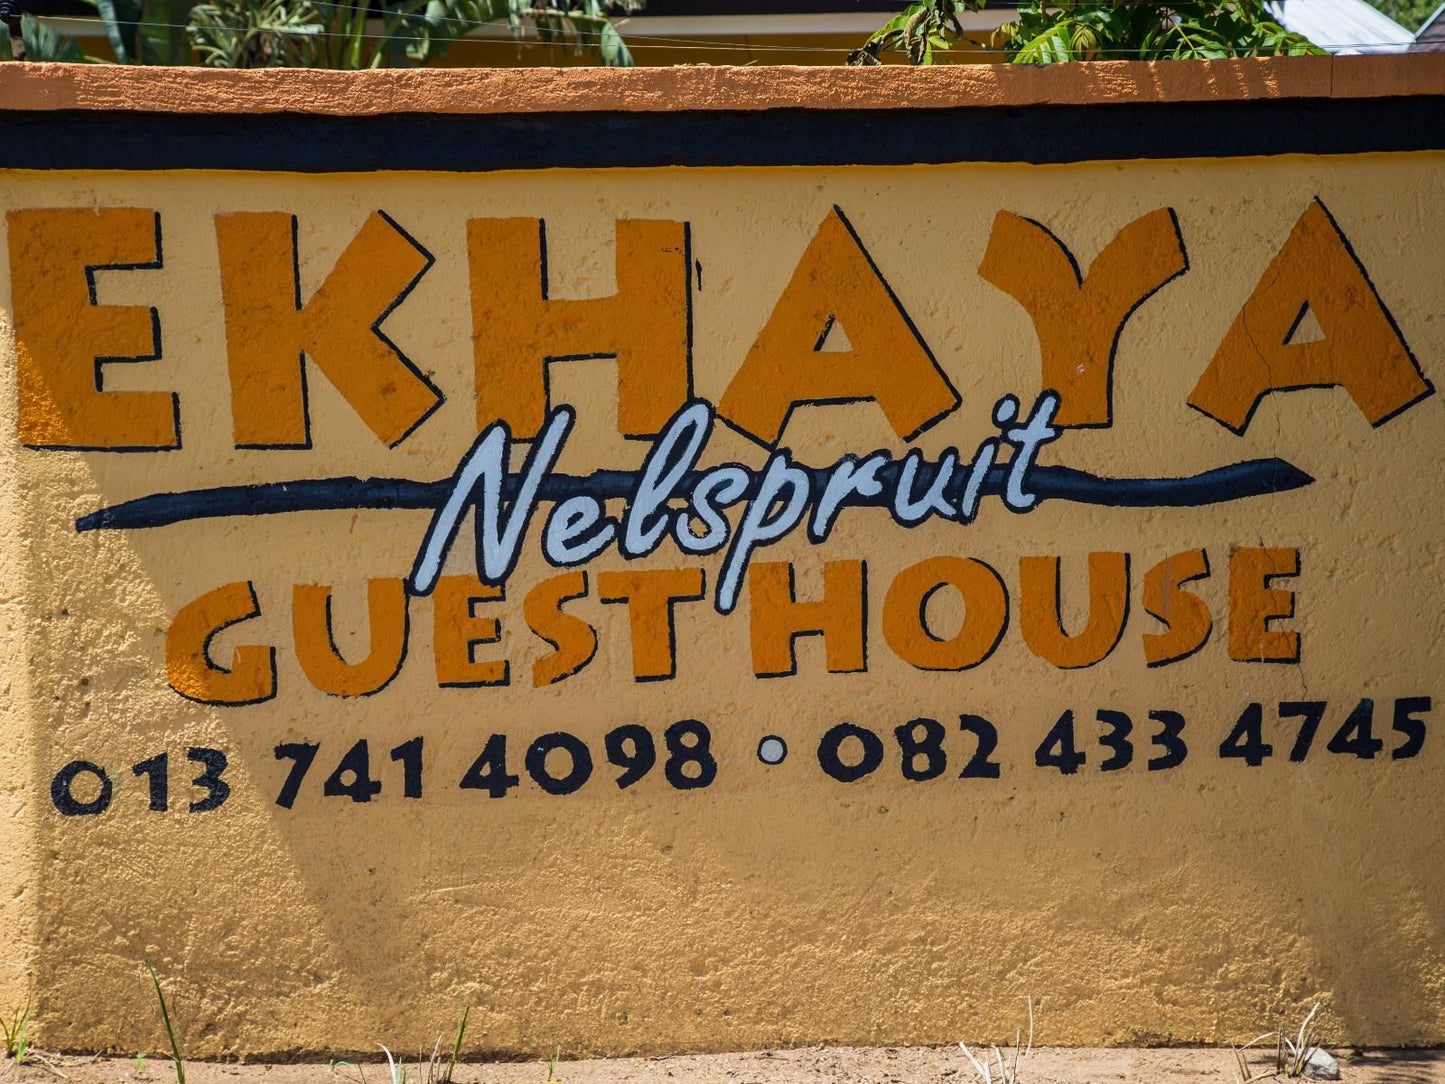 Ekhaya Nelspruit Guest House West Acres Nelspruit Mpumalanga South Africa Sign, Text, Wall, Architecture